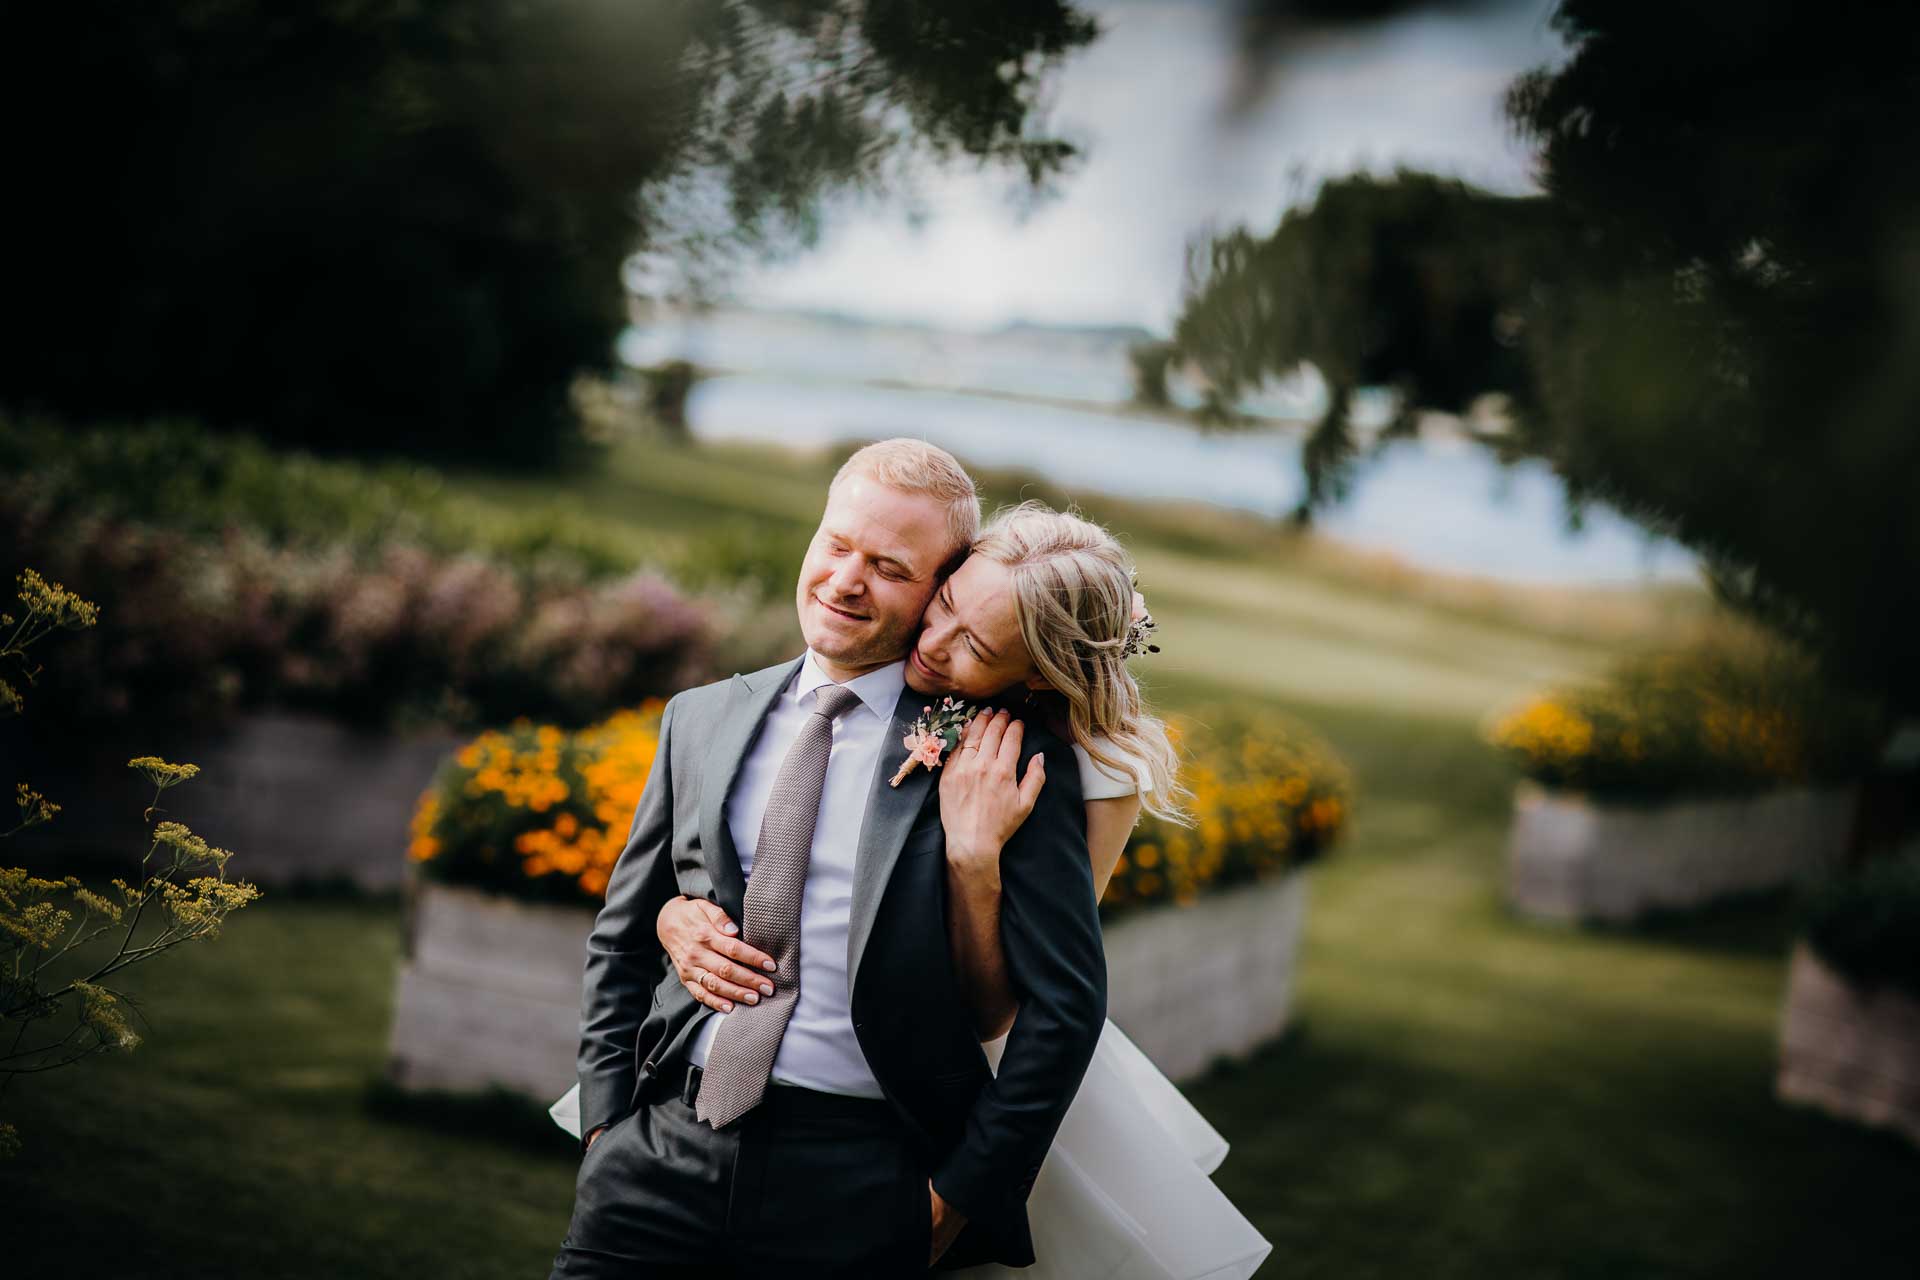 Det perfekte øjeblik: Bryllupskys under Gl Avernæs' spir